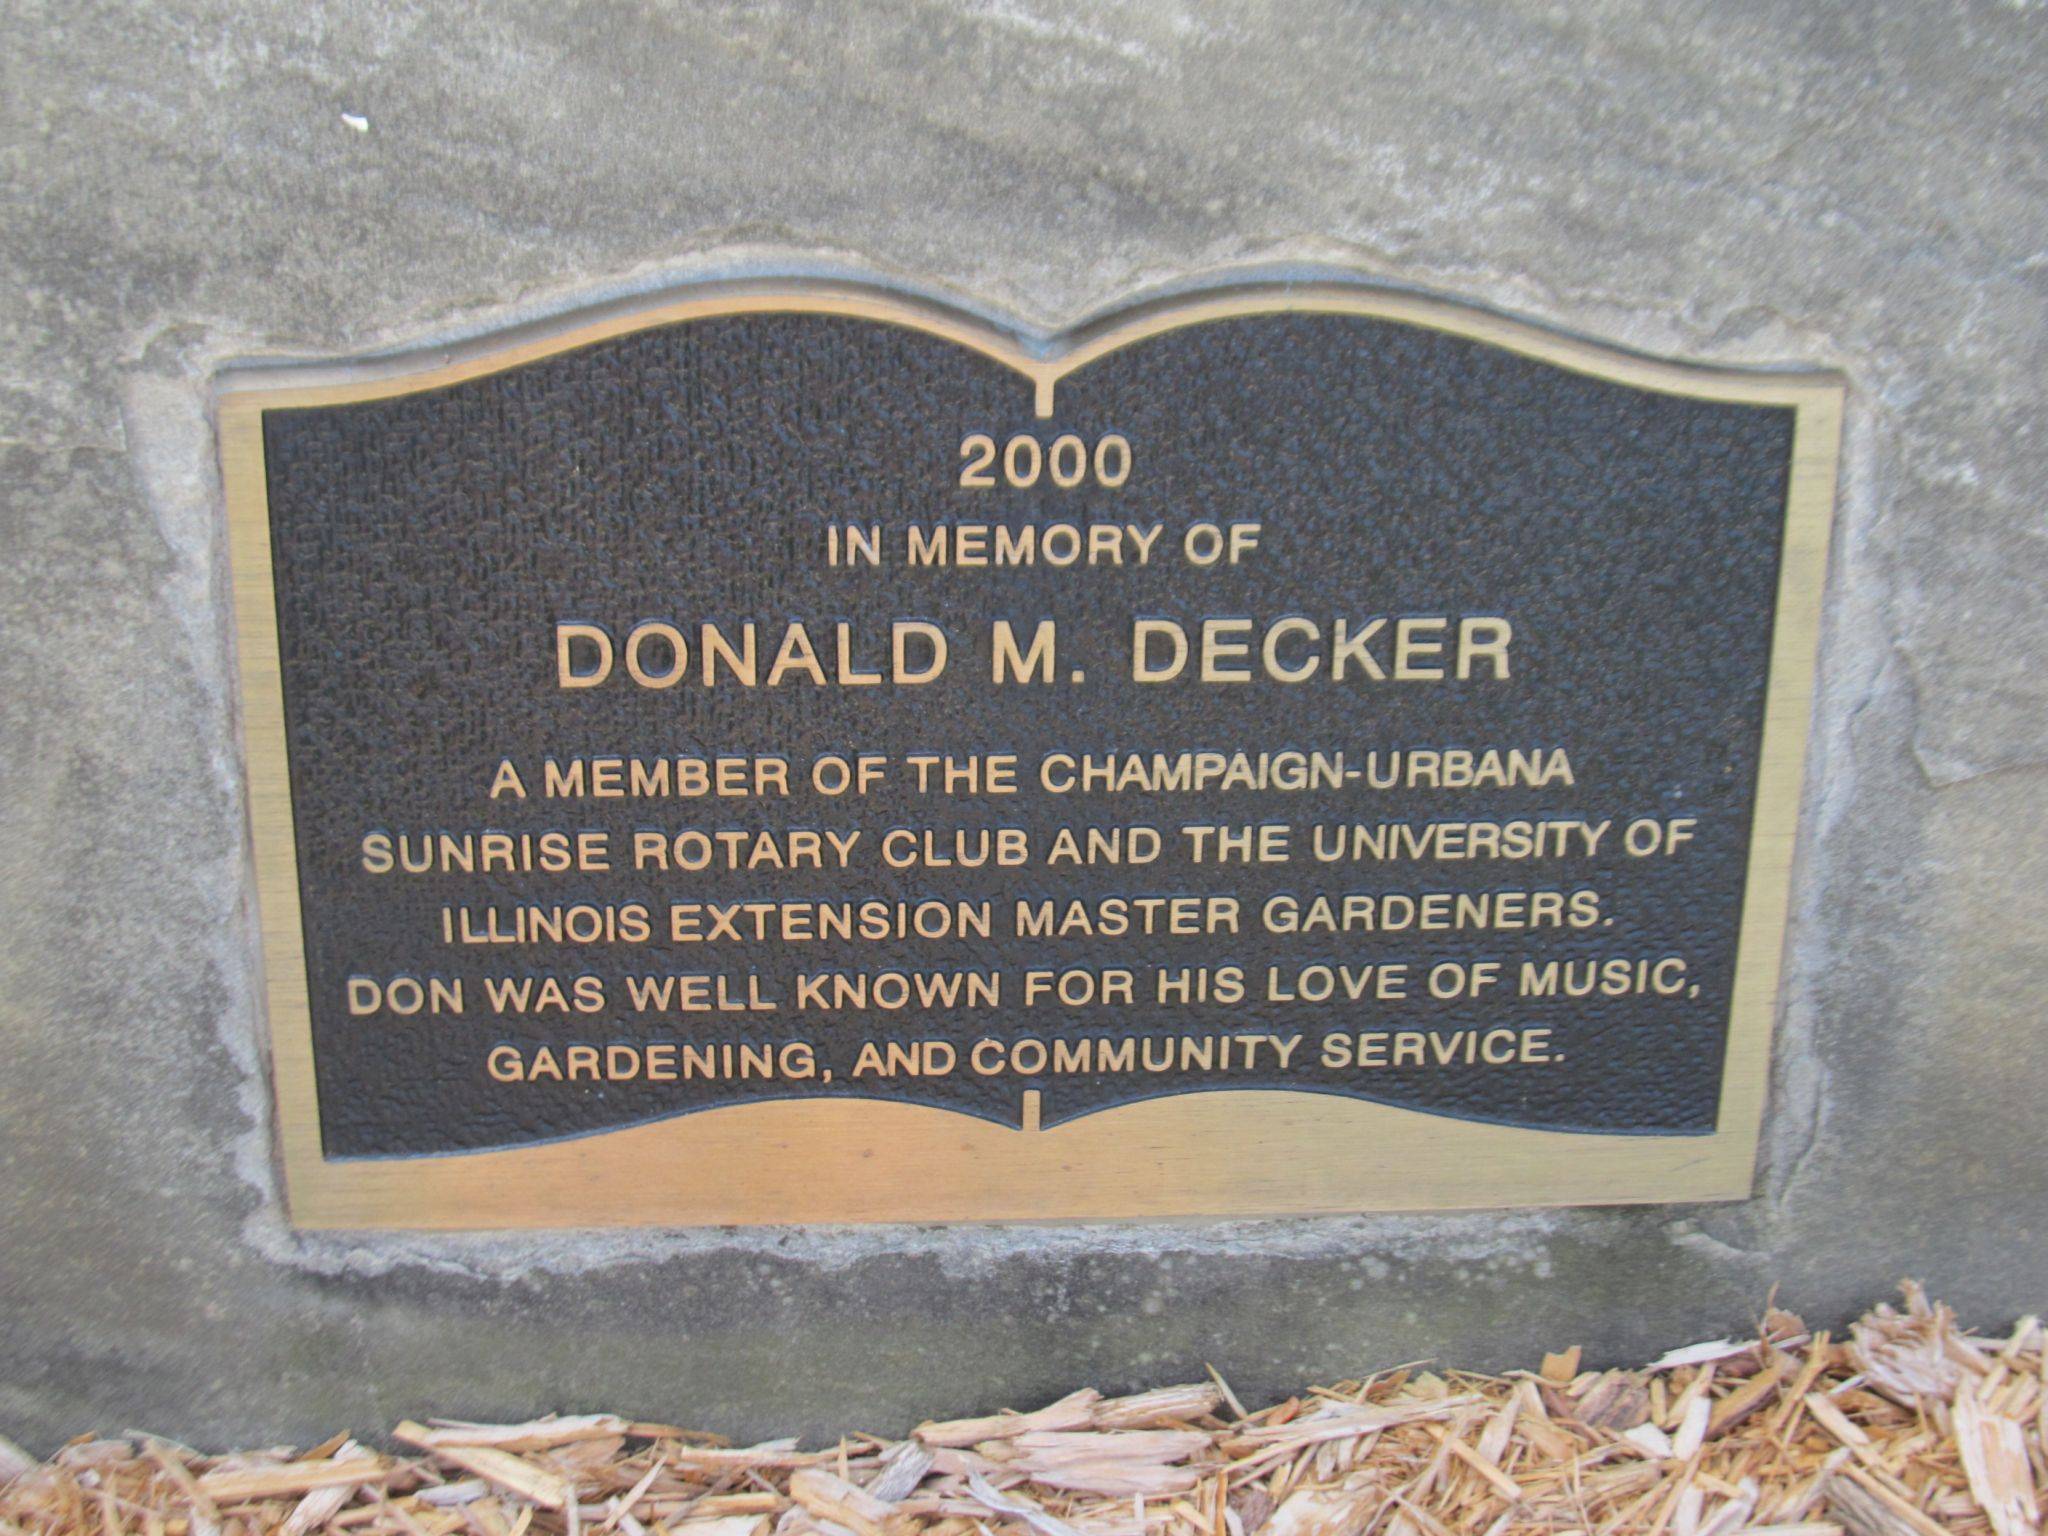 Mr. Decker’s musical legacy